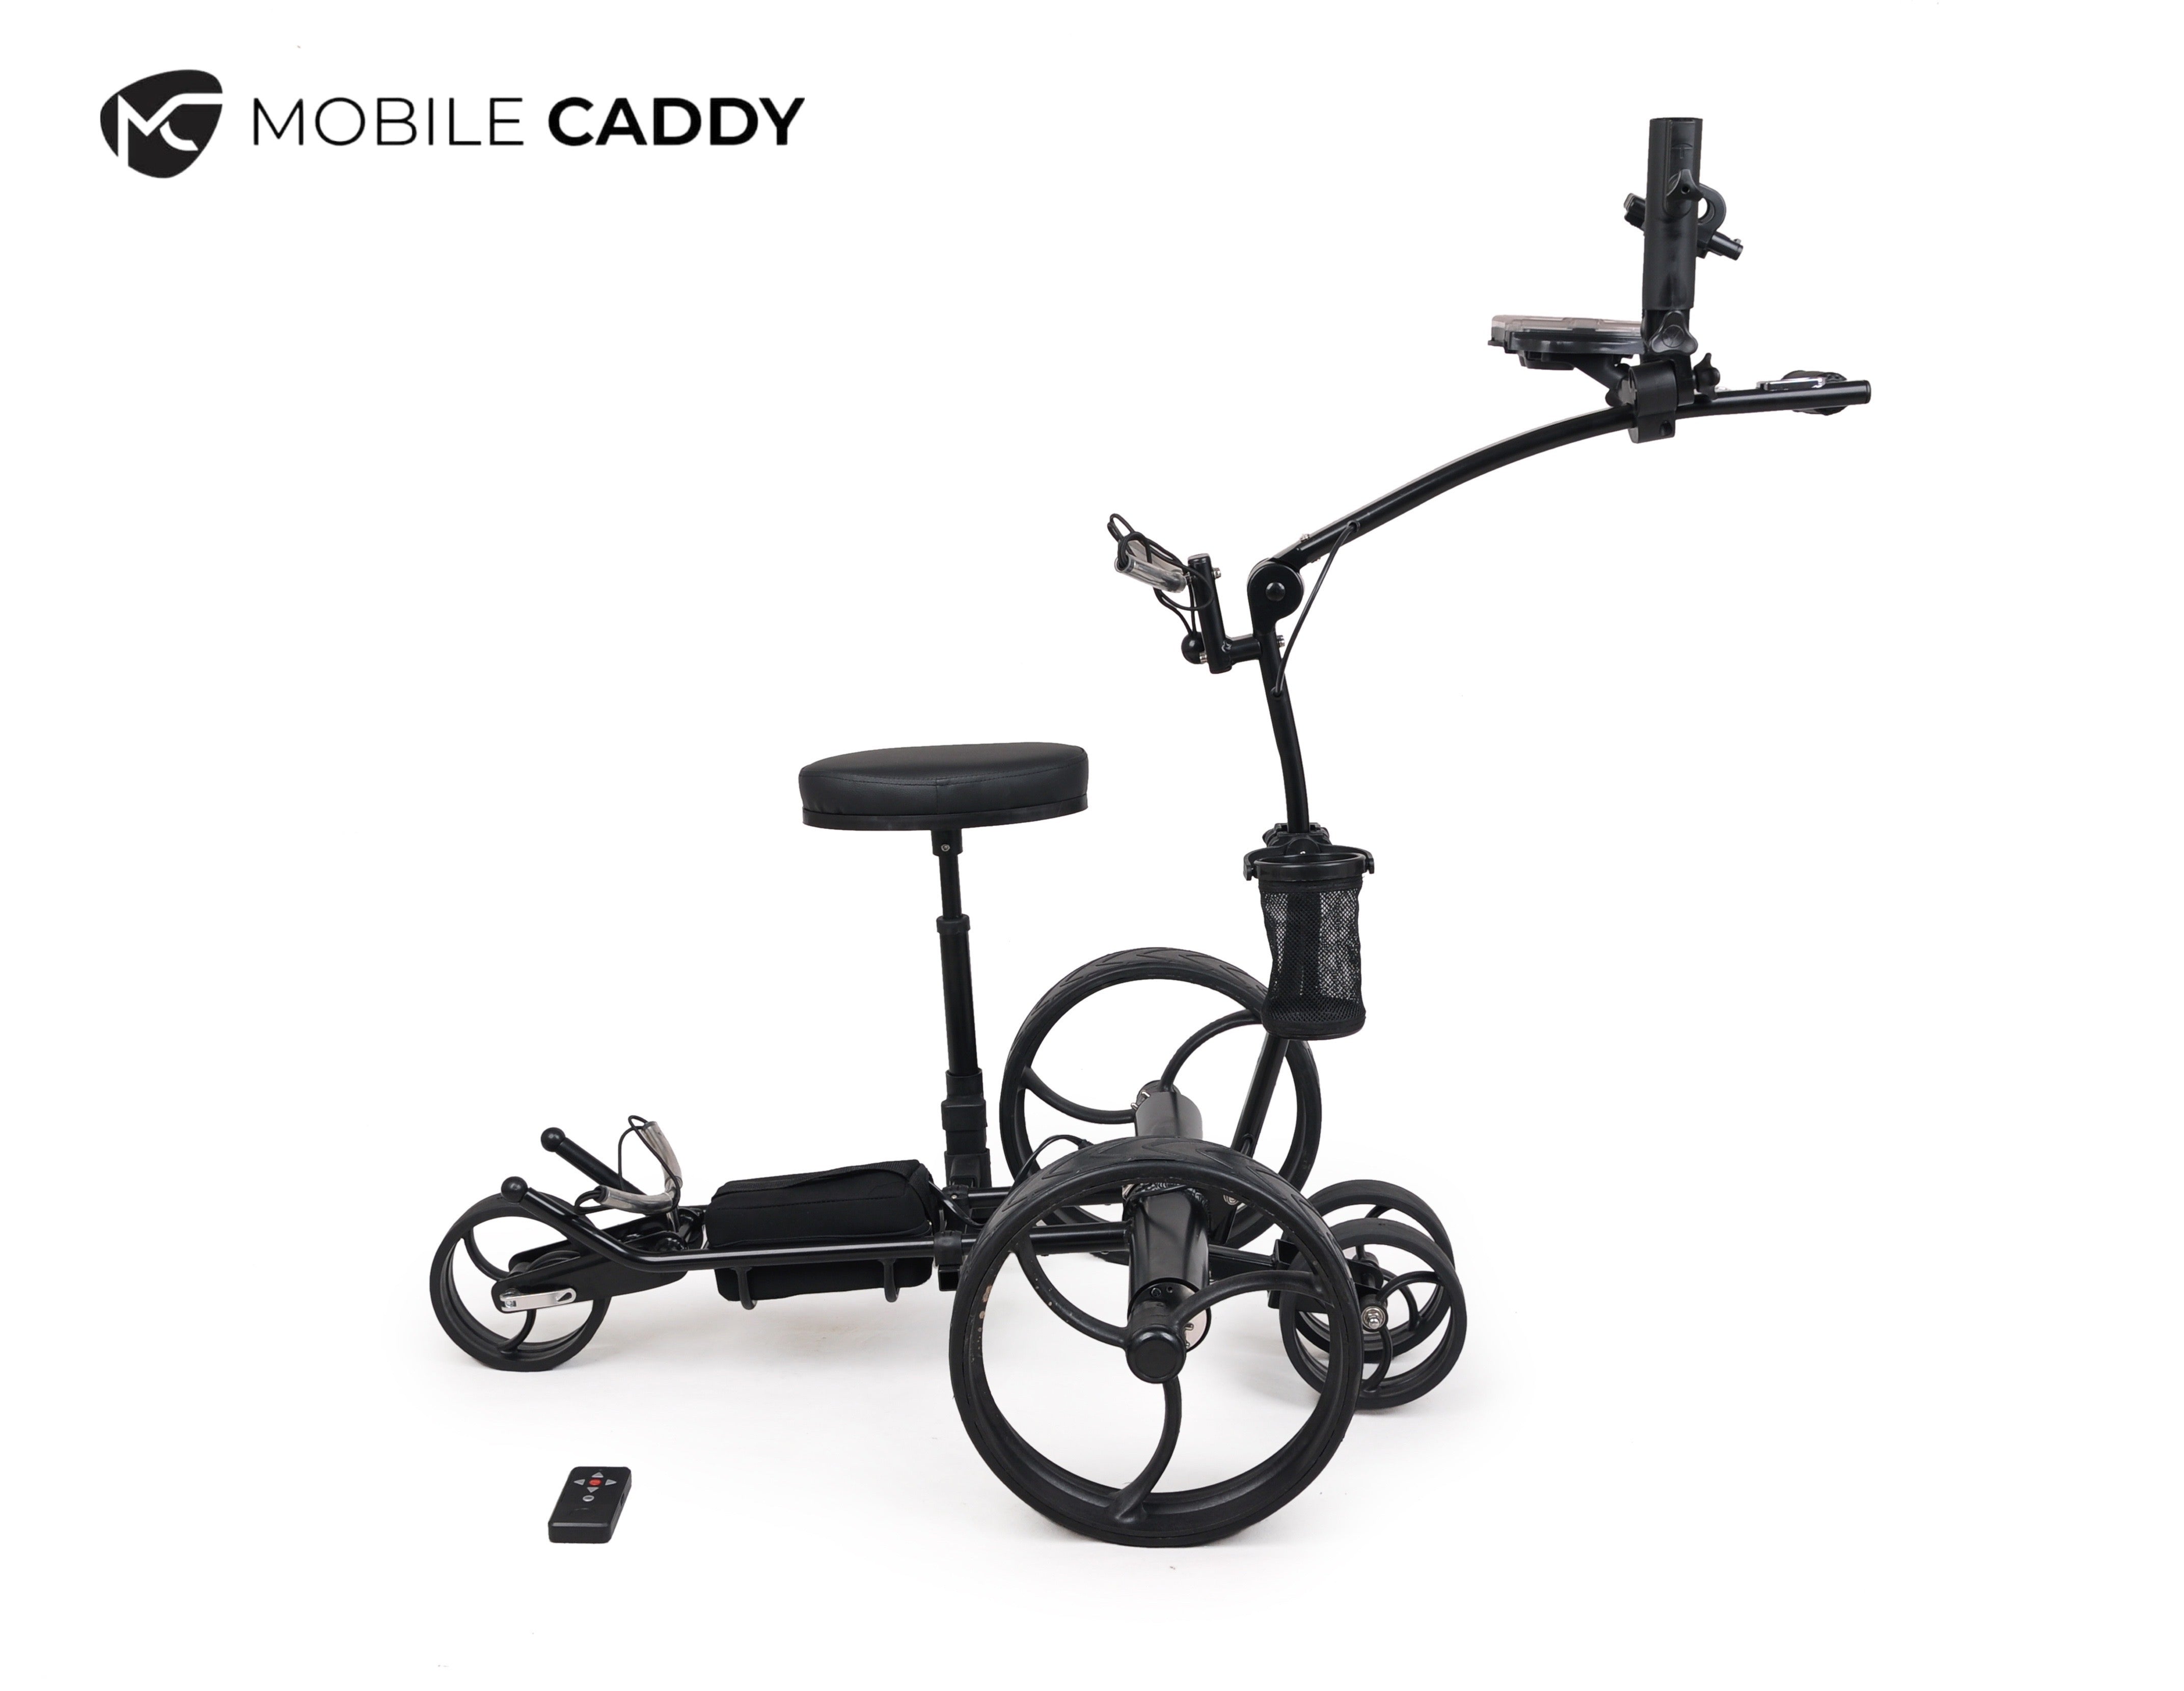 MobileCaddy R11 Electric Golf Cart